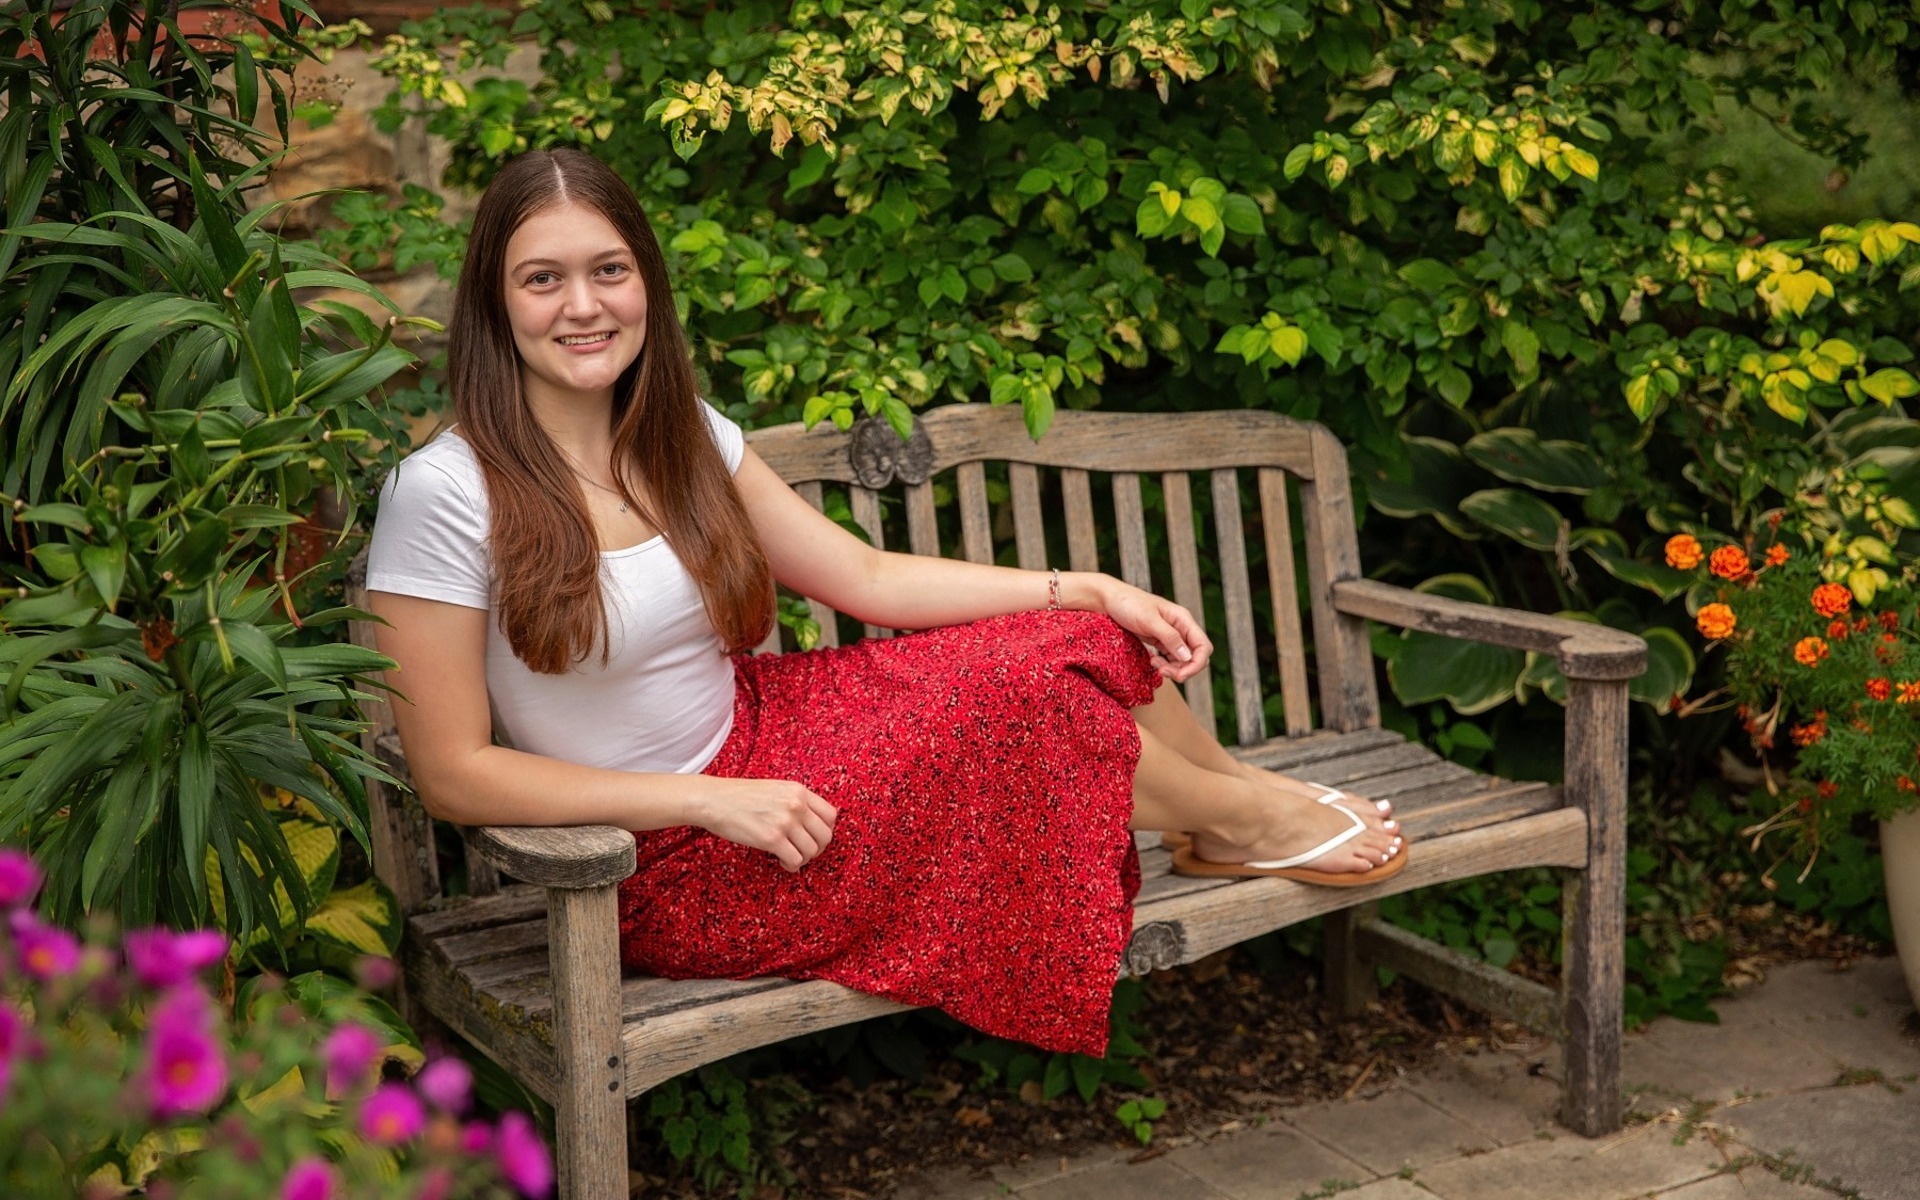 hs senior girl in red skirt sits on a park bench in a flower garden